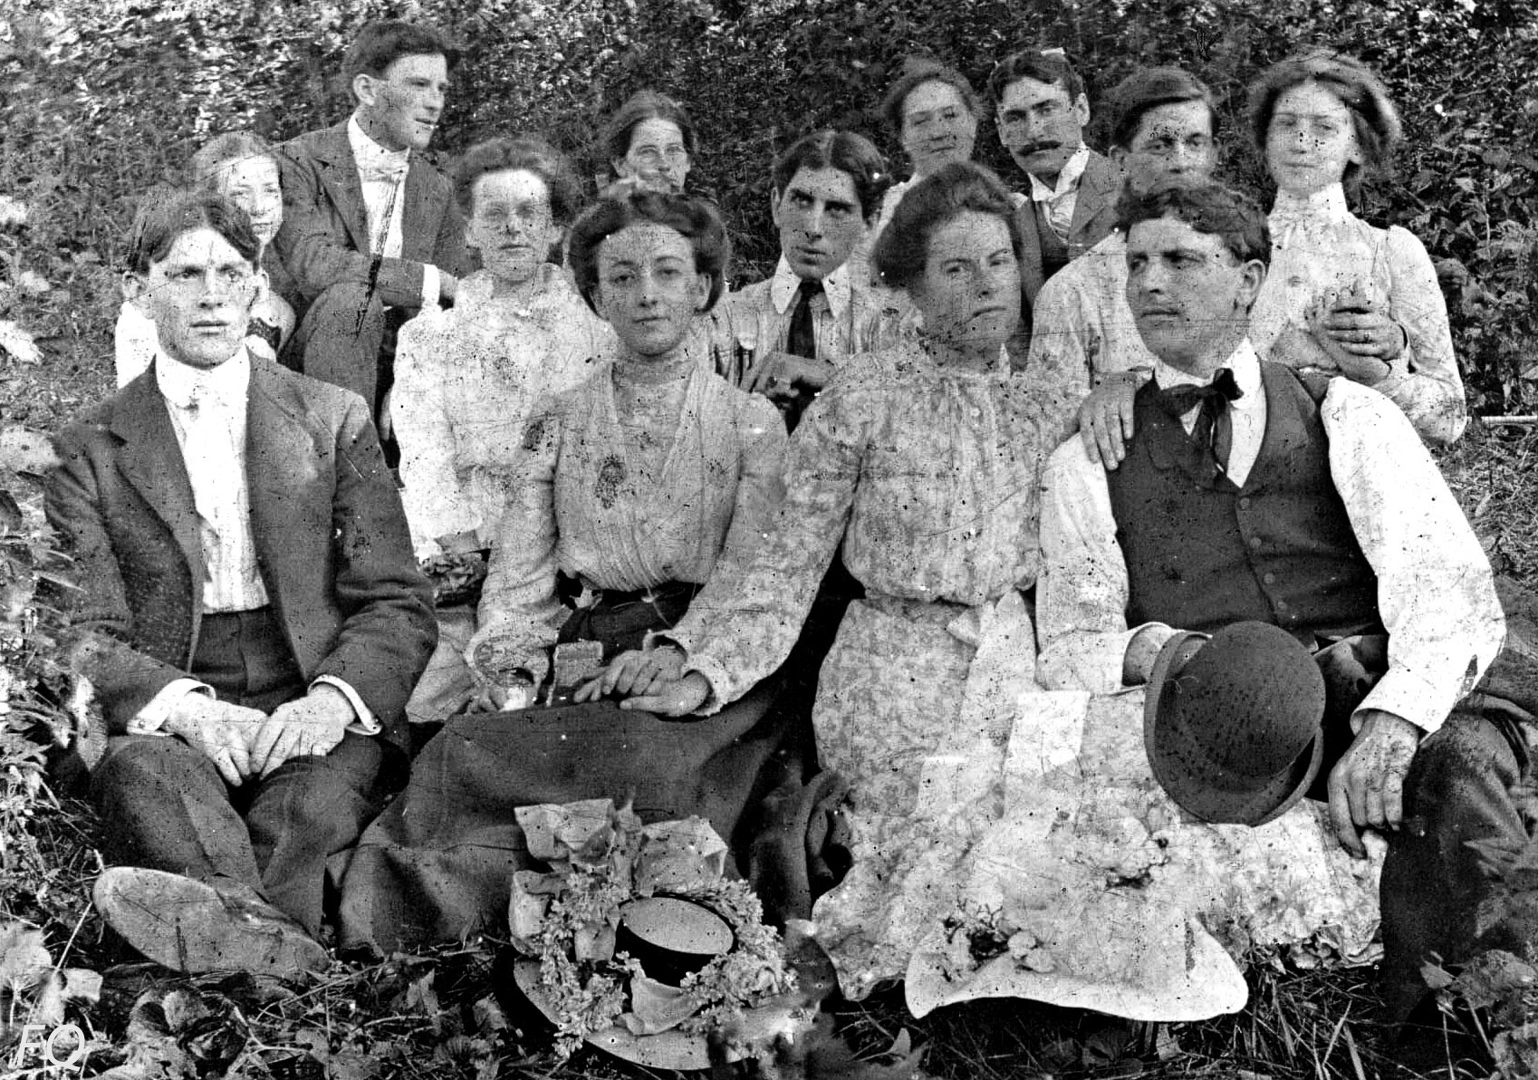 Children of Patrick & Catherine Killinger Conville, including Mary Conville Henkel, Margaret Conville Burleycamp & Catherine Conville Fitzgerald (Turtle Creek PA, abt 1905)